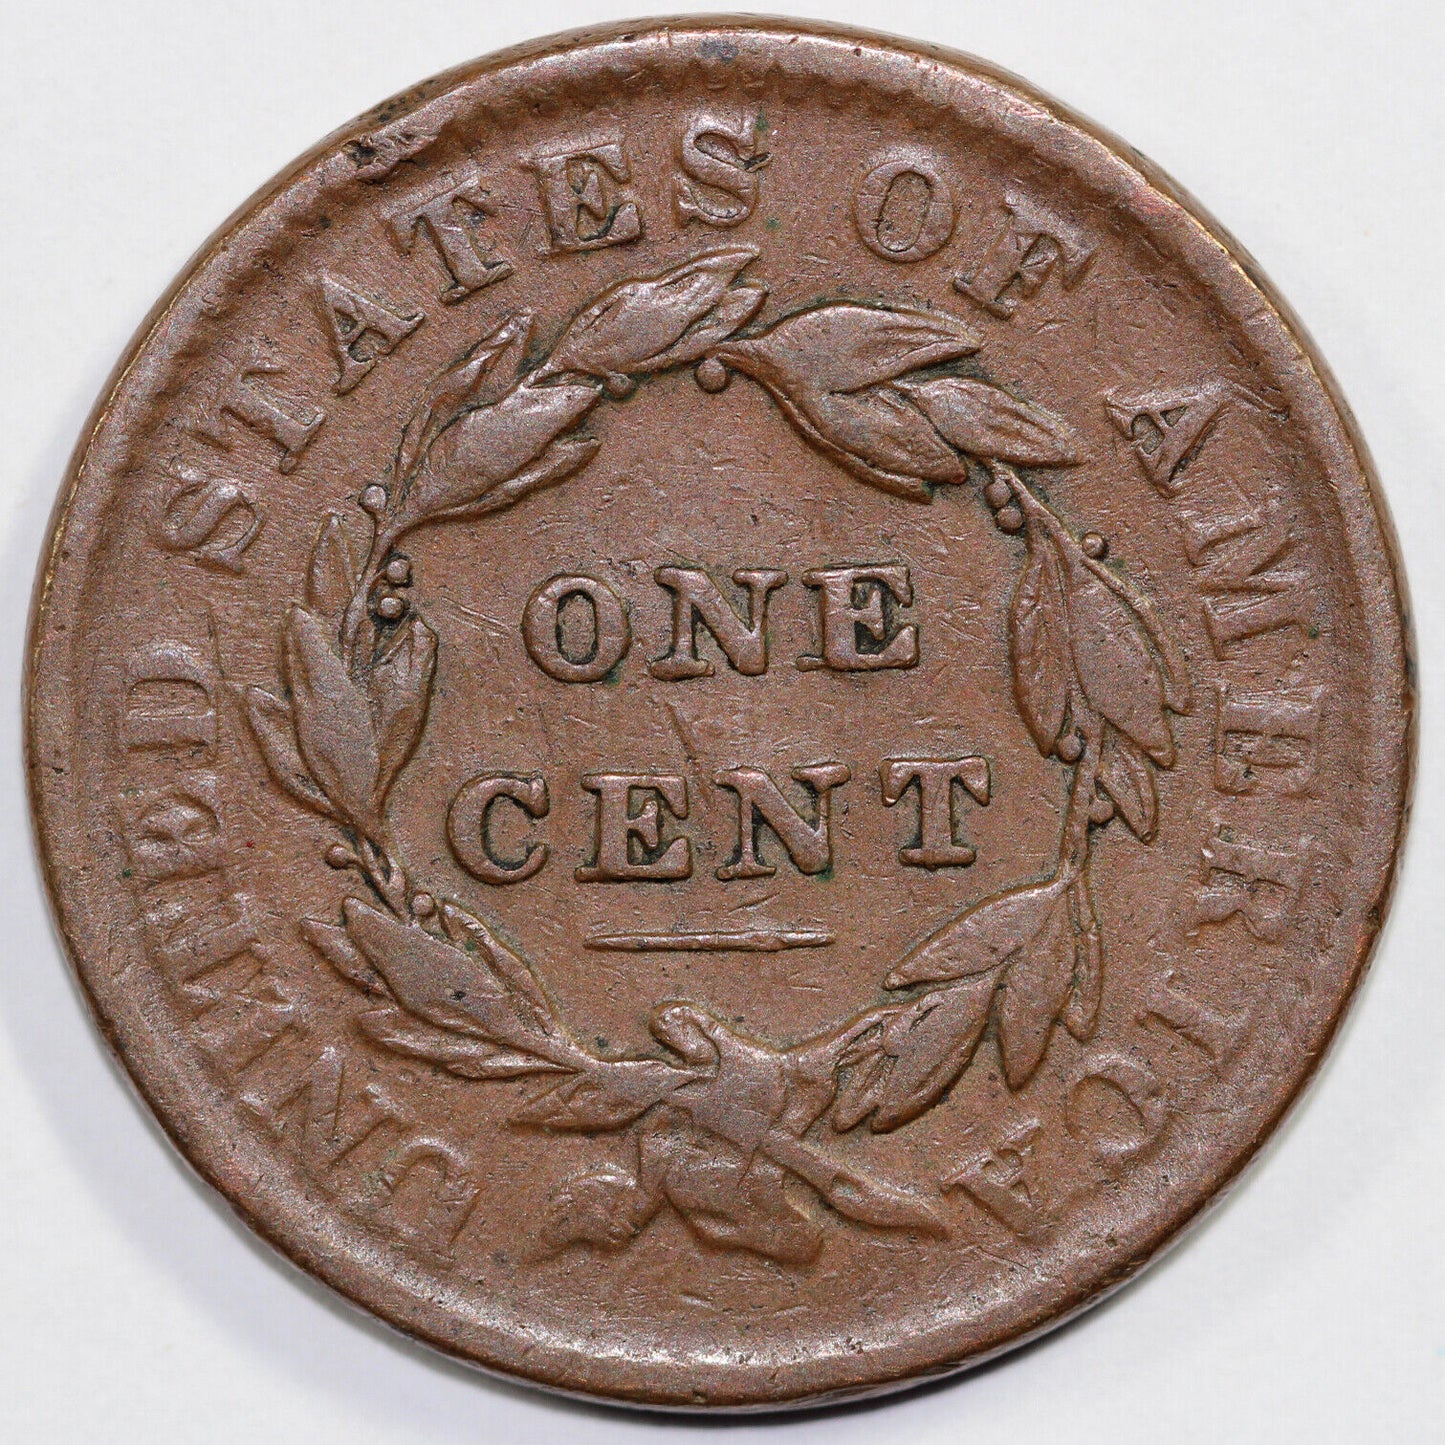 1833 1c Matron Head Large Cent